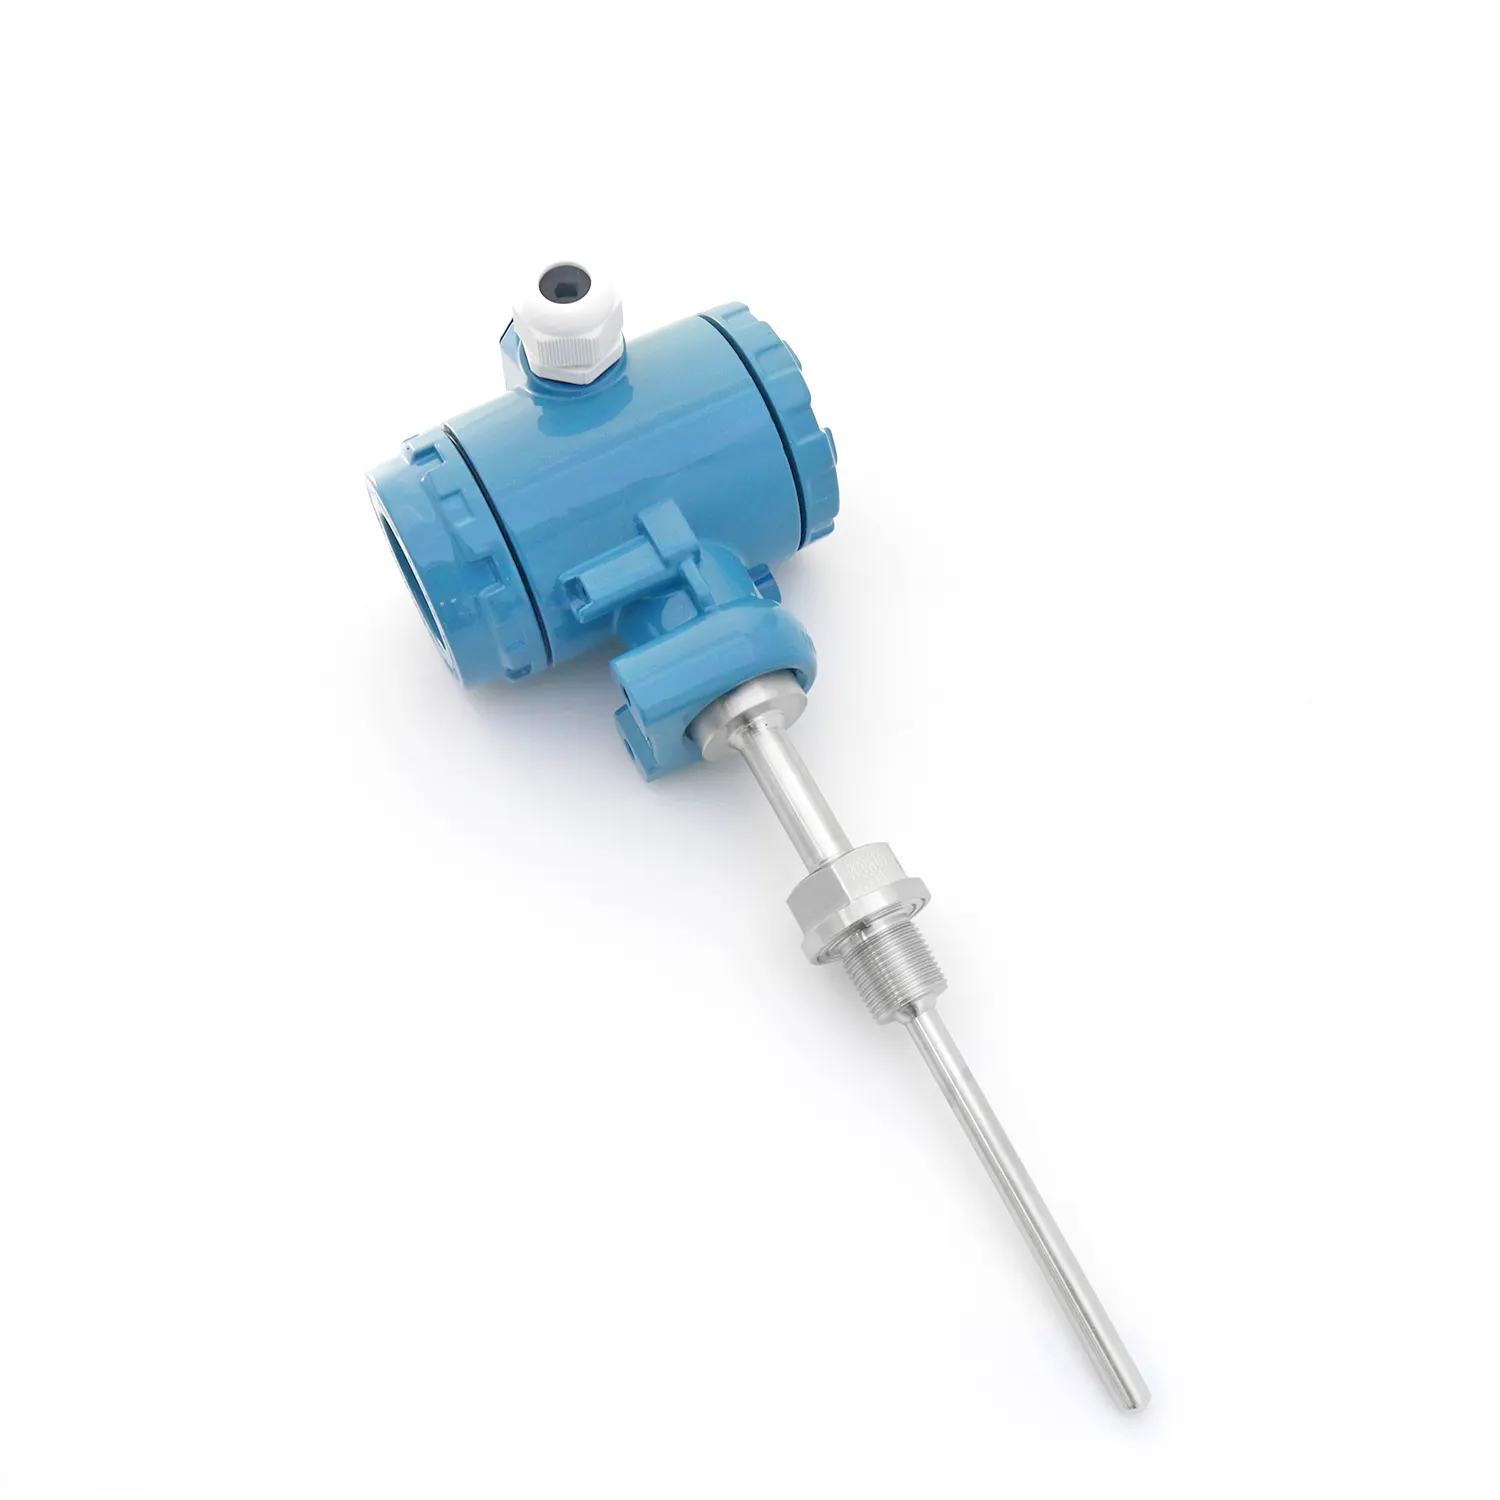 Hank Industrial 0.5%FS IP65 -50-250 Degree 4-20mA HART Pump Compressor CNG LNG Water Oil PT100 Temperature Transmitter